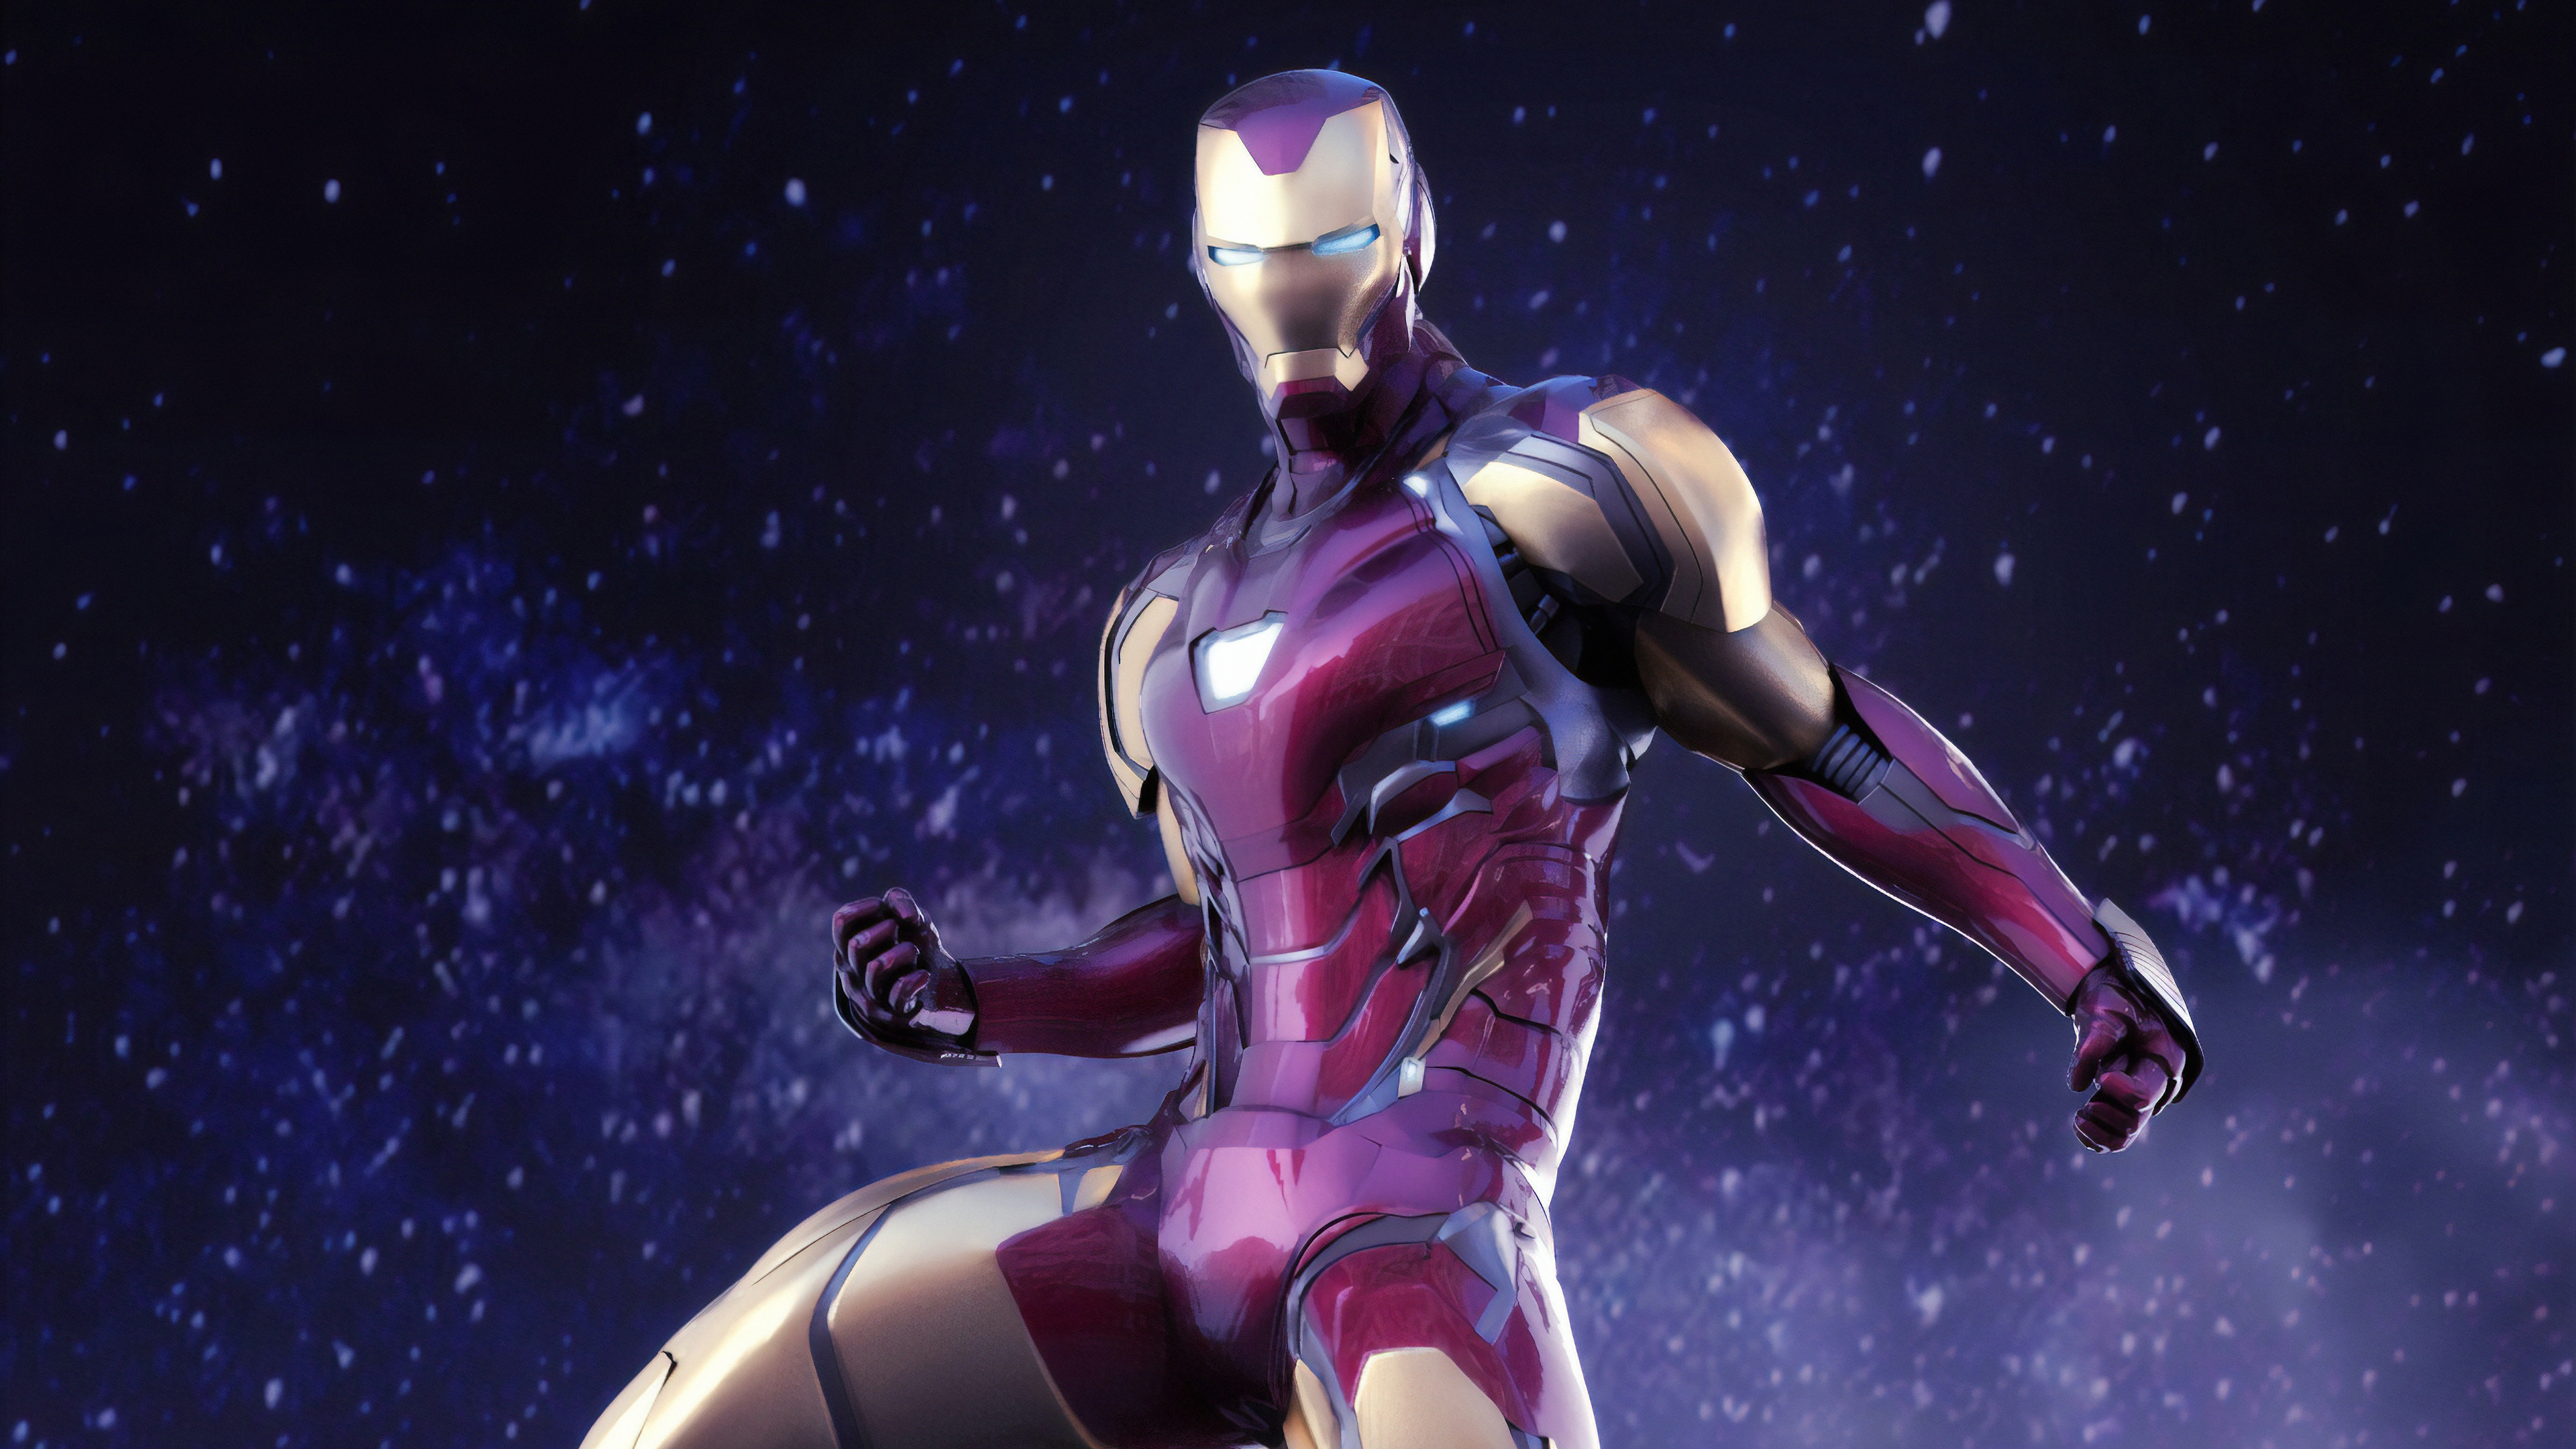 Download Avengers Iron Man In Mark 43 Suit Wallpaper | Wallpapers.com